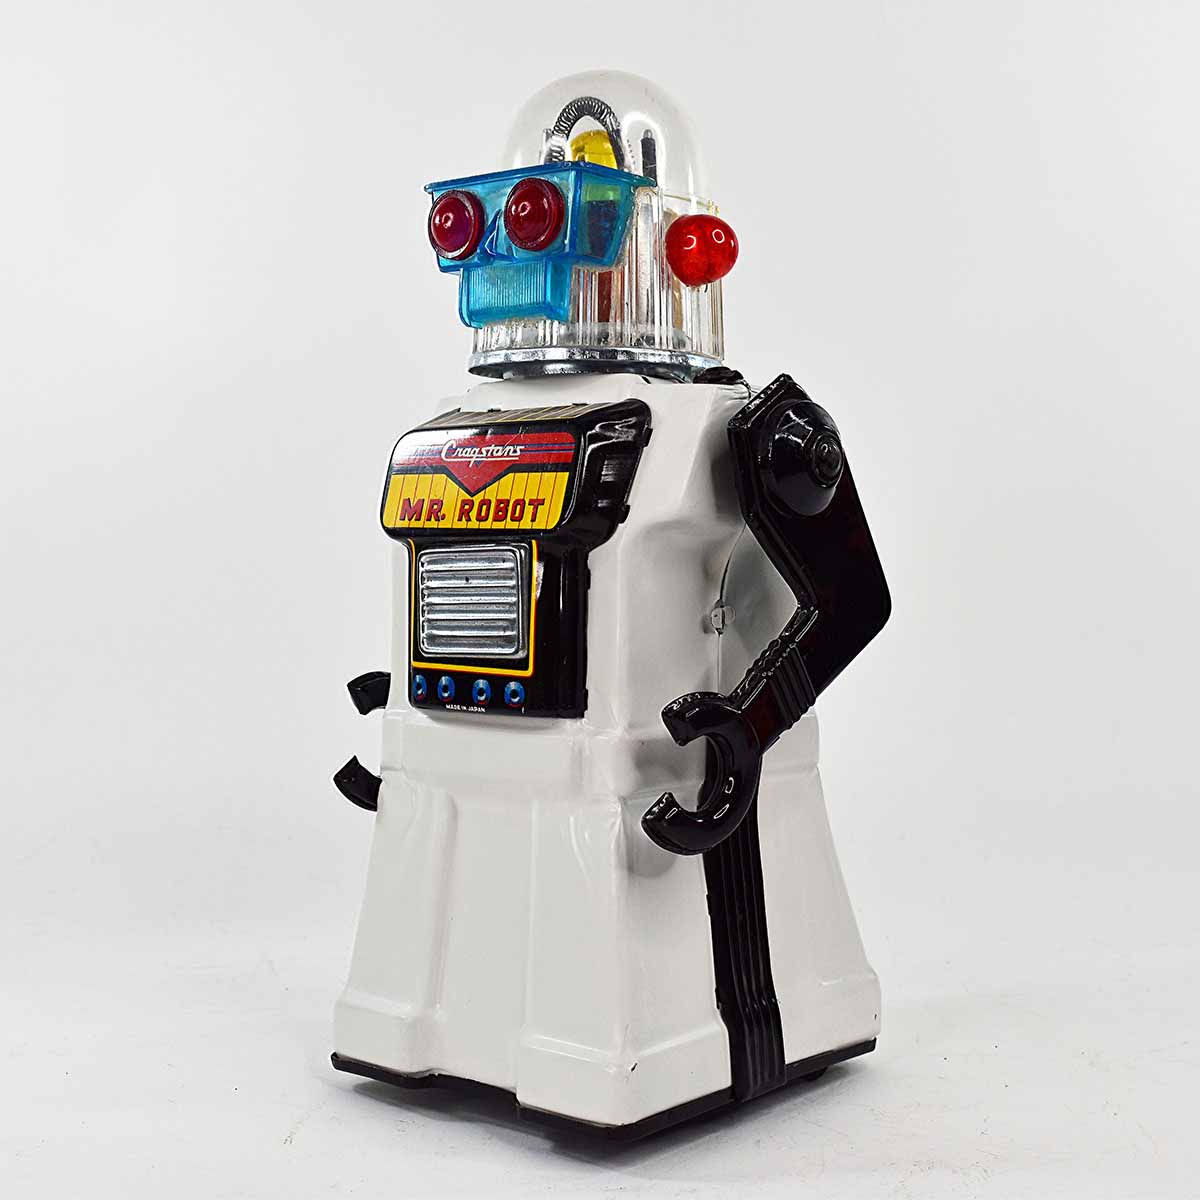 Mister Robot – NGS, Cragstan – Japan